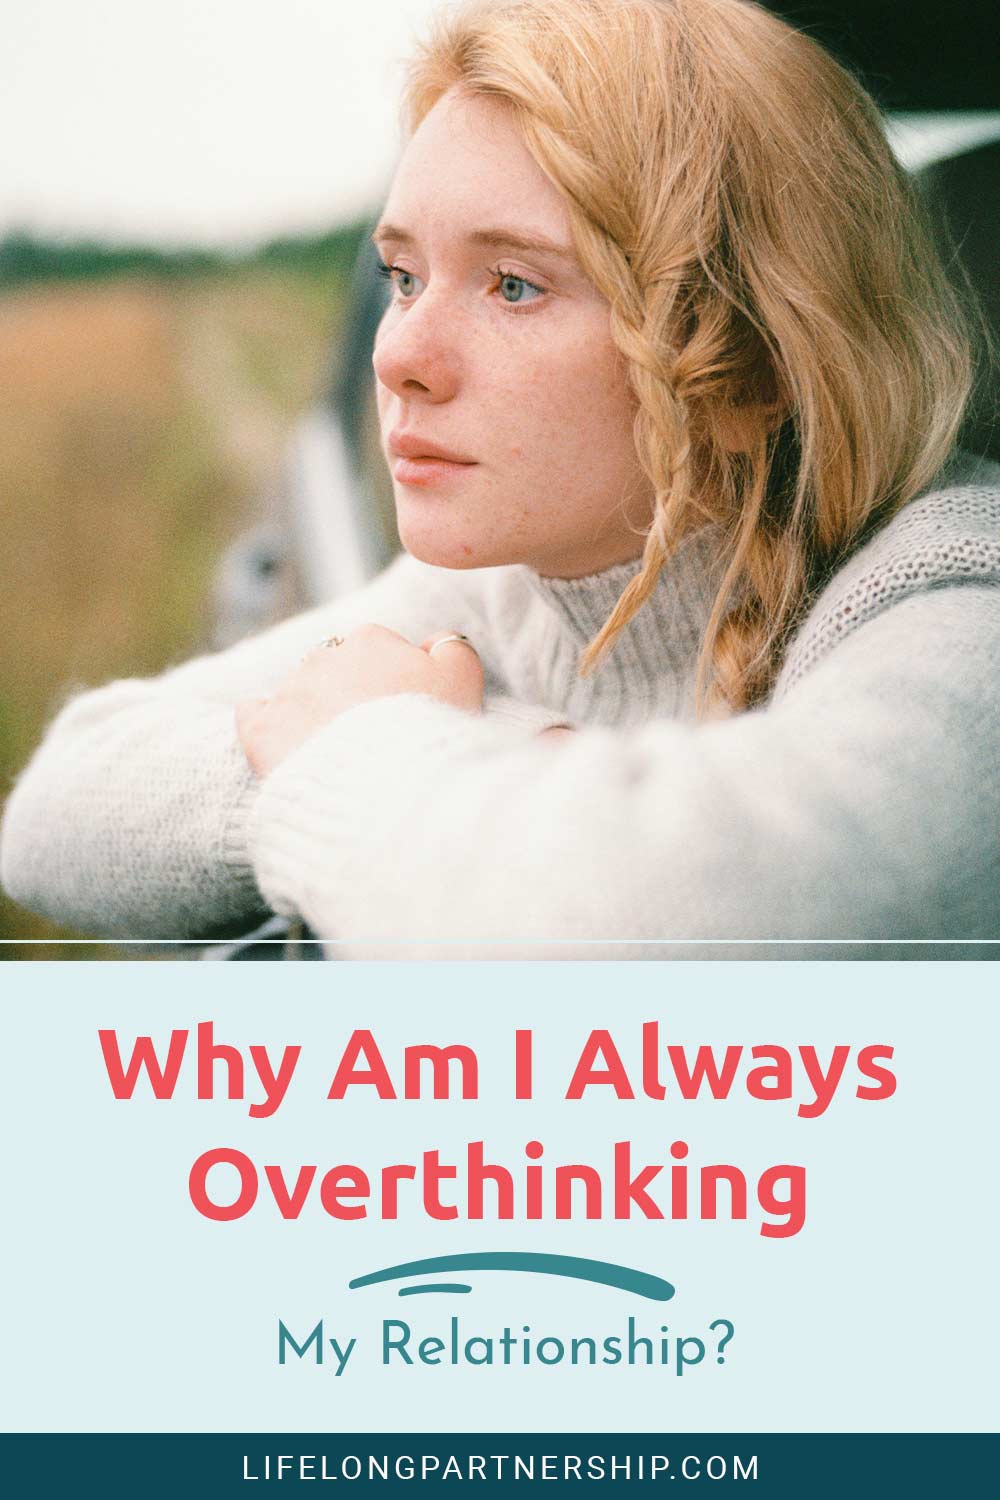 Why Am I Always Overthinking My Relationship?